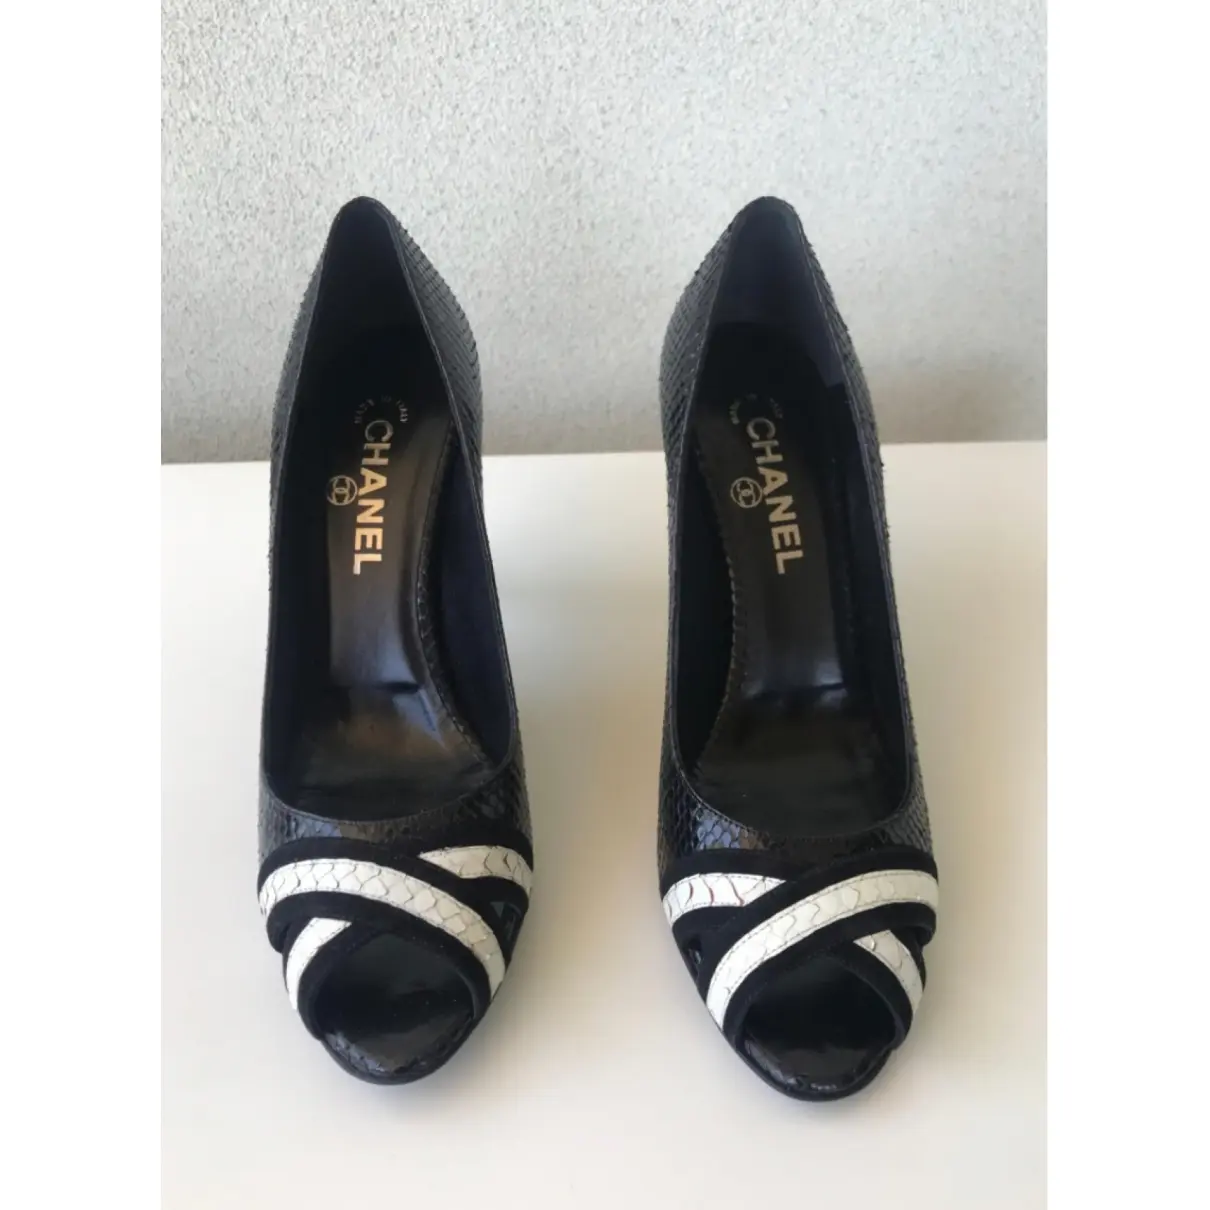 Buy Chanel Python heels online